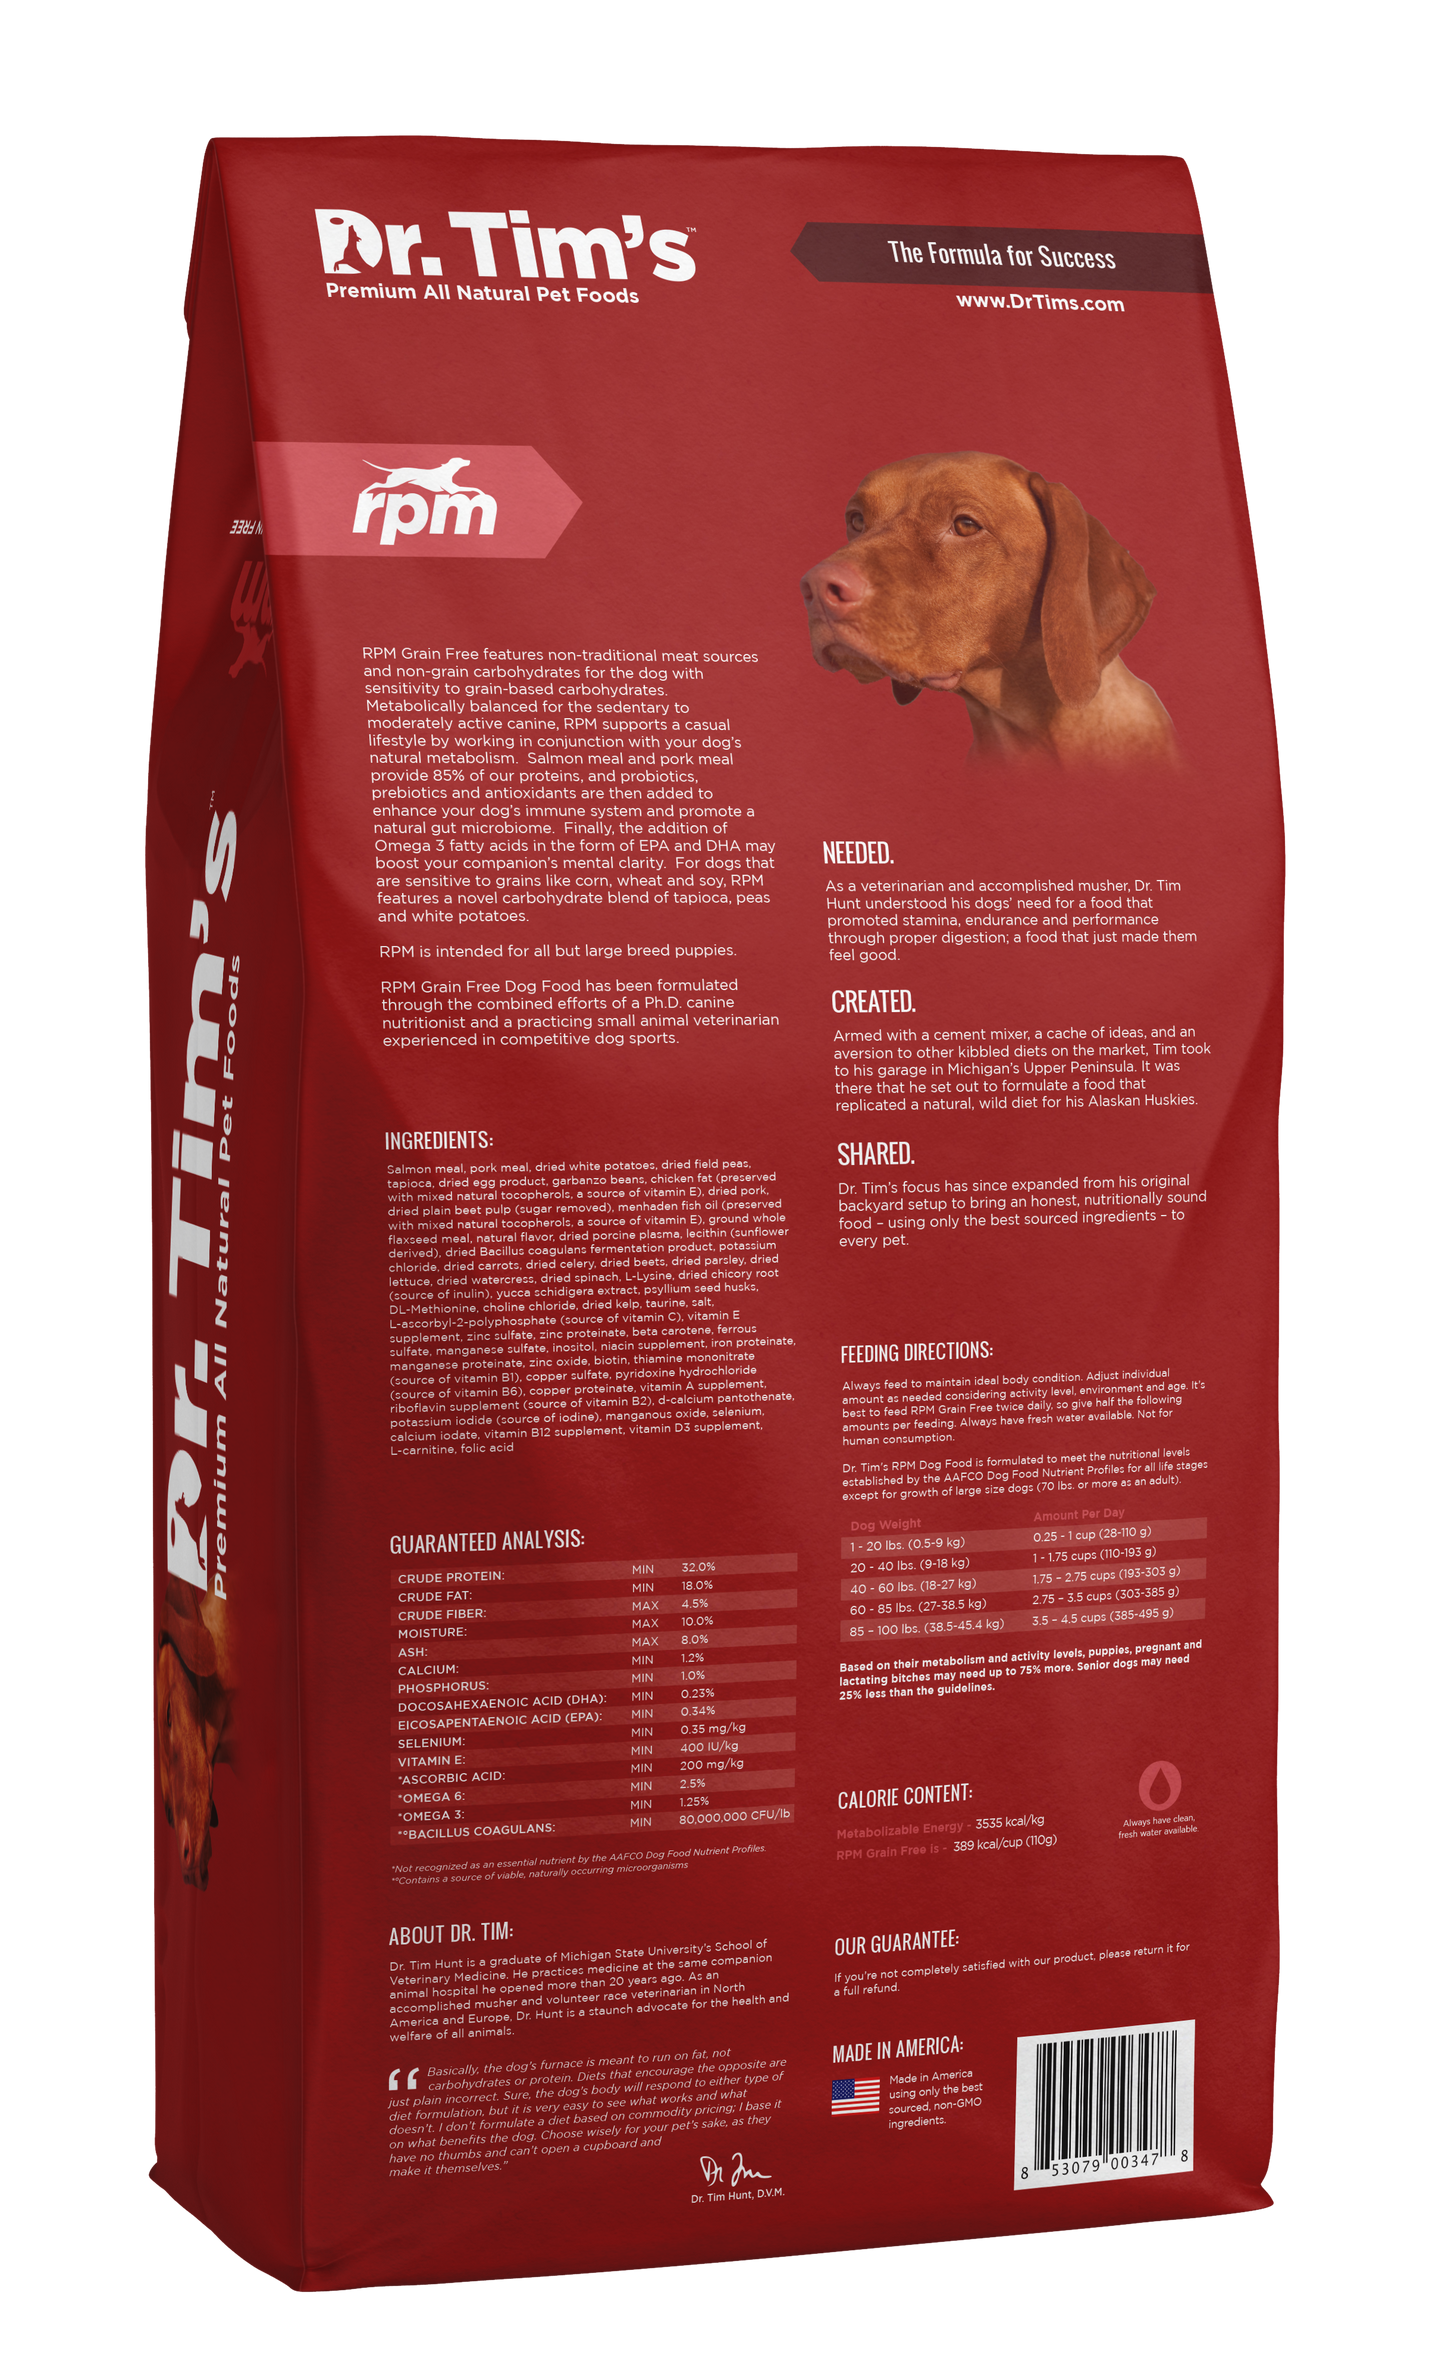 Dr. Tim's RPM Grain Free Formula Dog Food